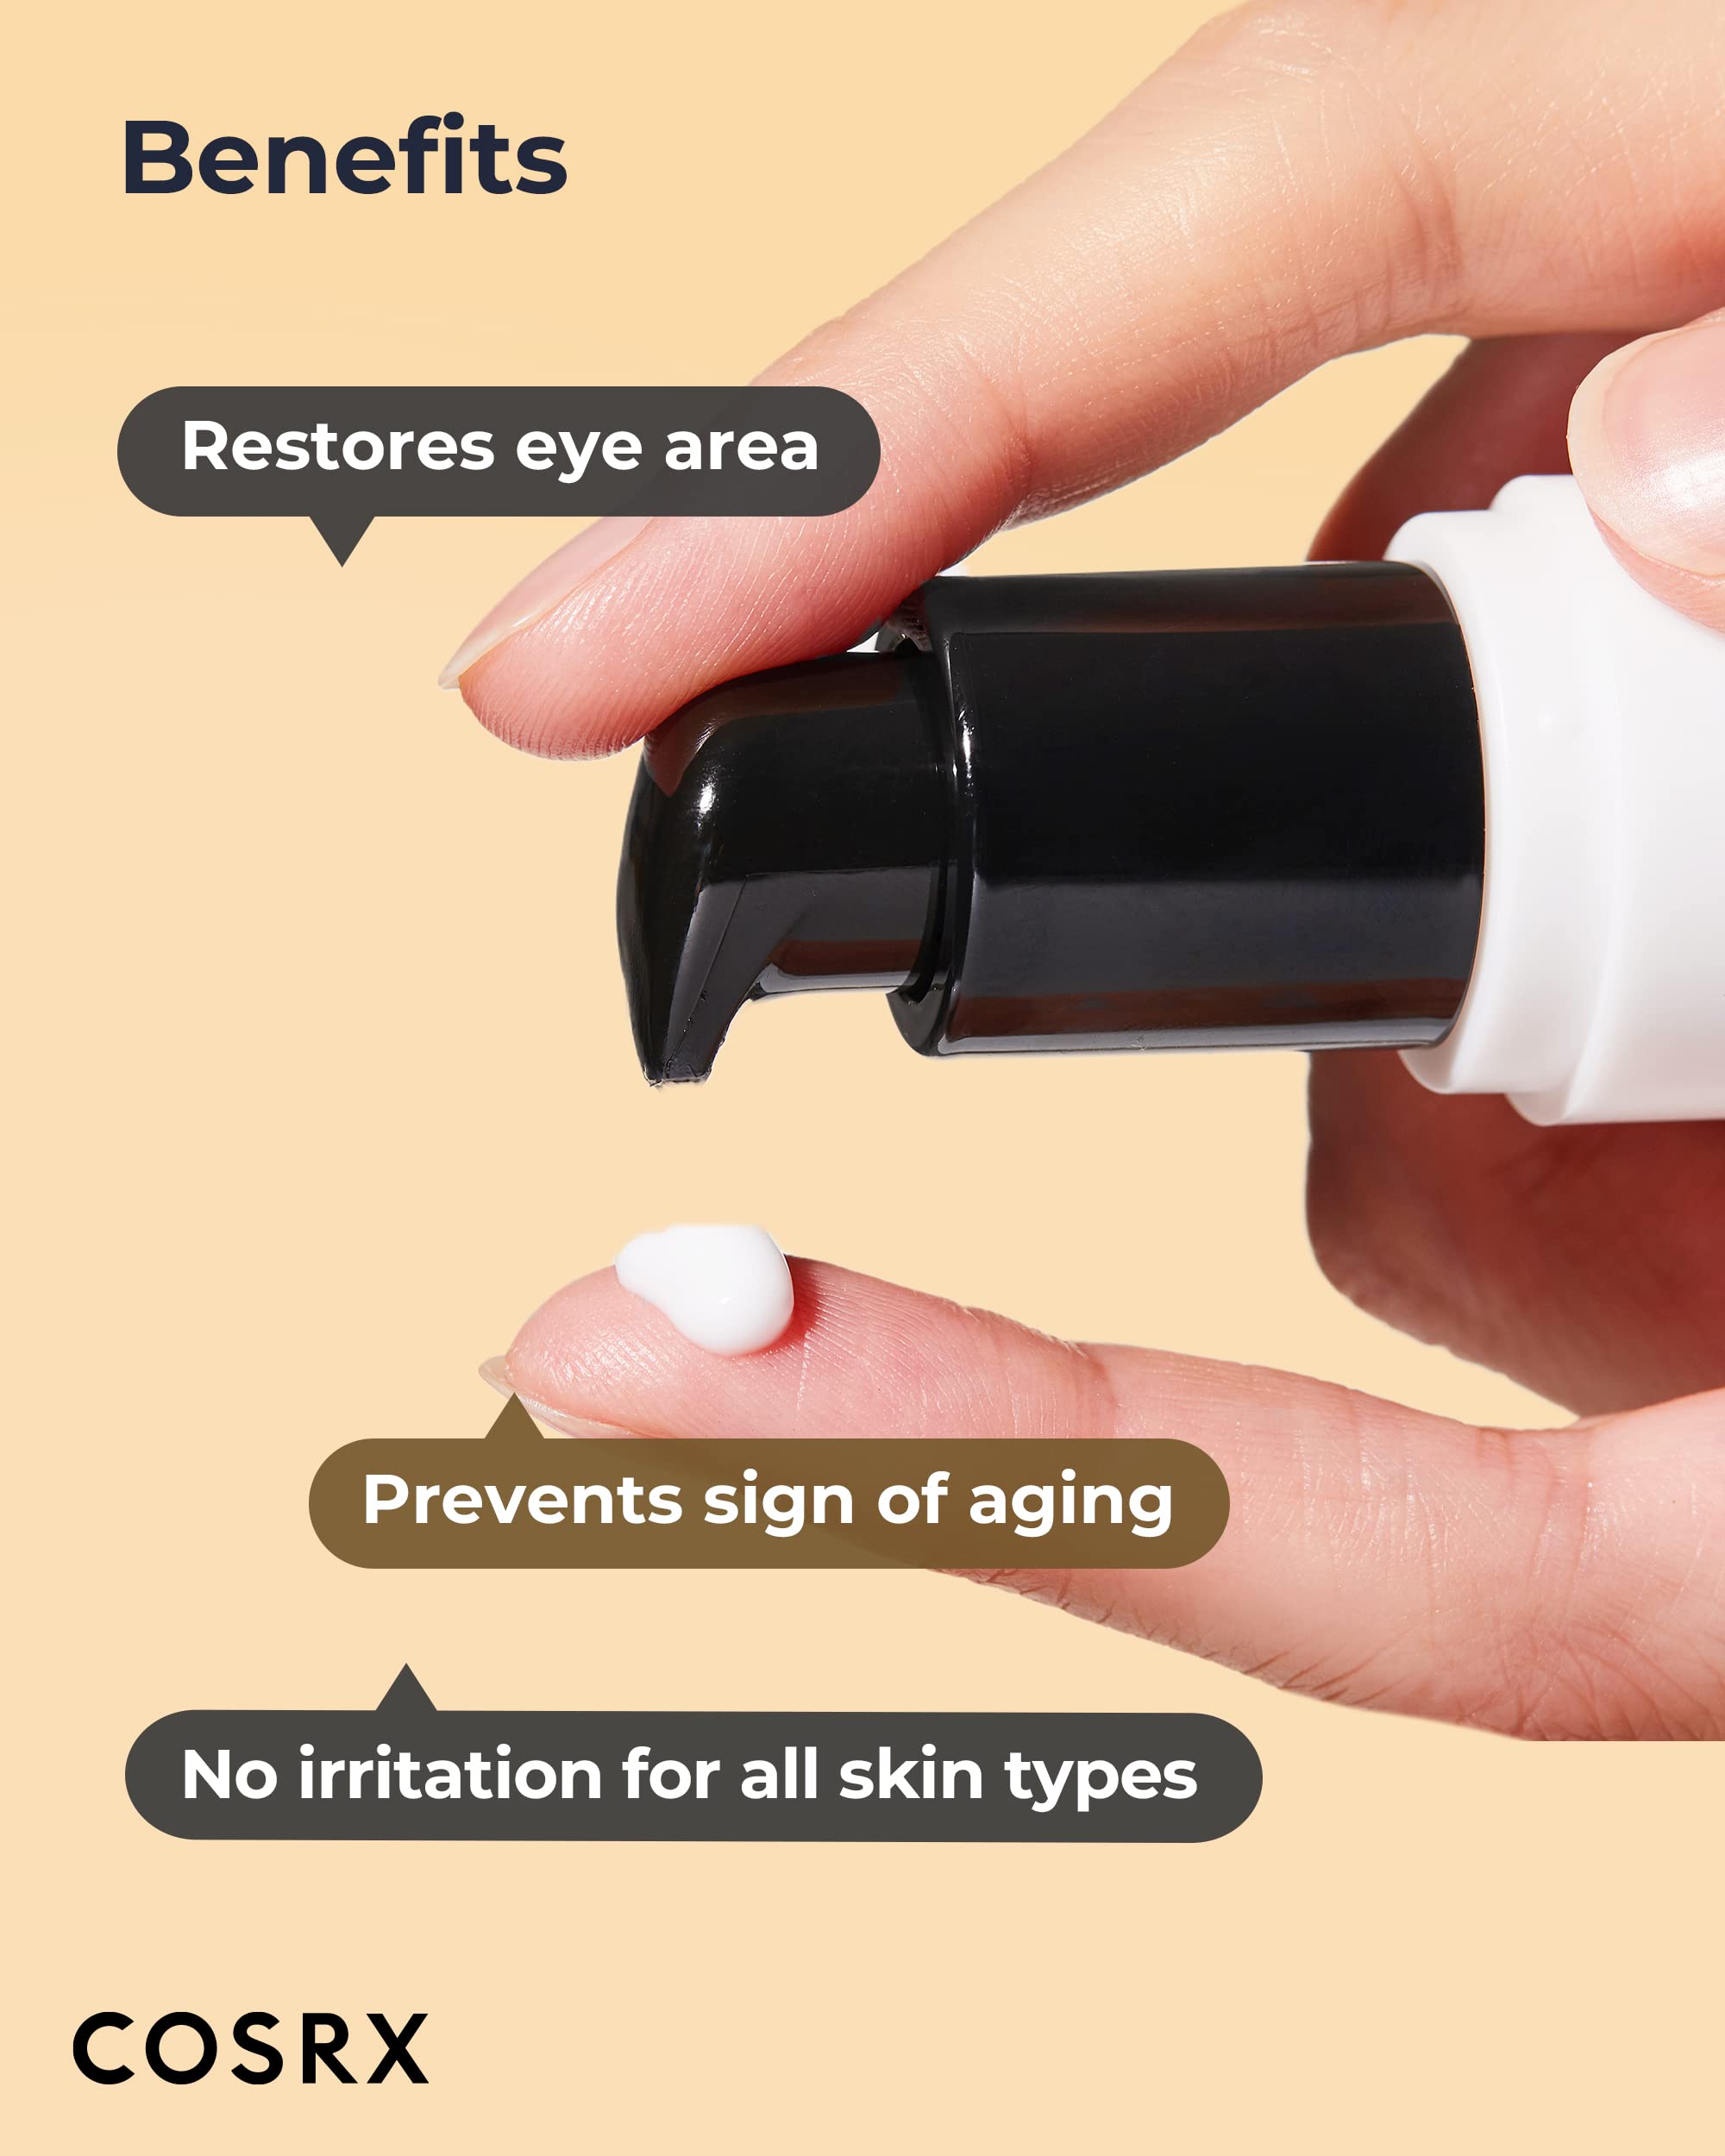 COSRX Night Skincare Routine- Snail Peptide Eye Cream + Retinol 0.1% Cream- Snail Mucin & Niacinamide, Brighten & Reduce Dark Circles, Firming Anti-again, Korean Skincare